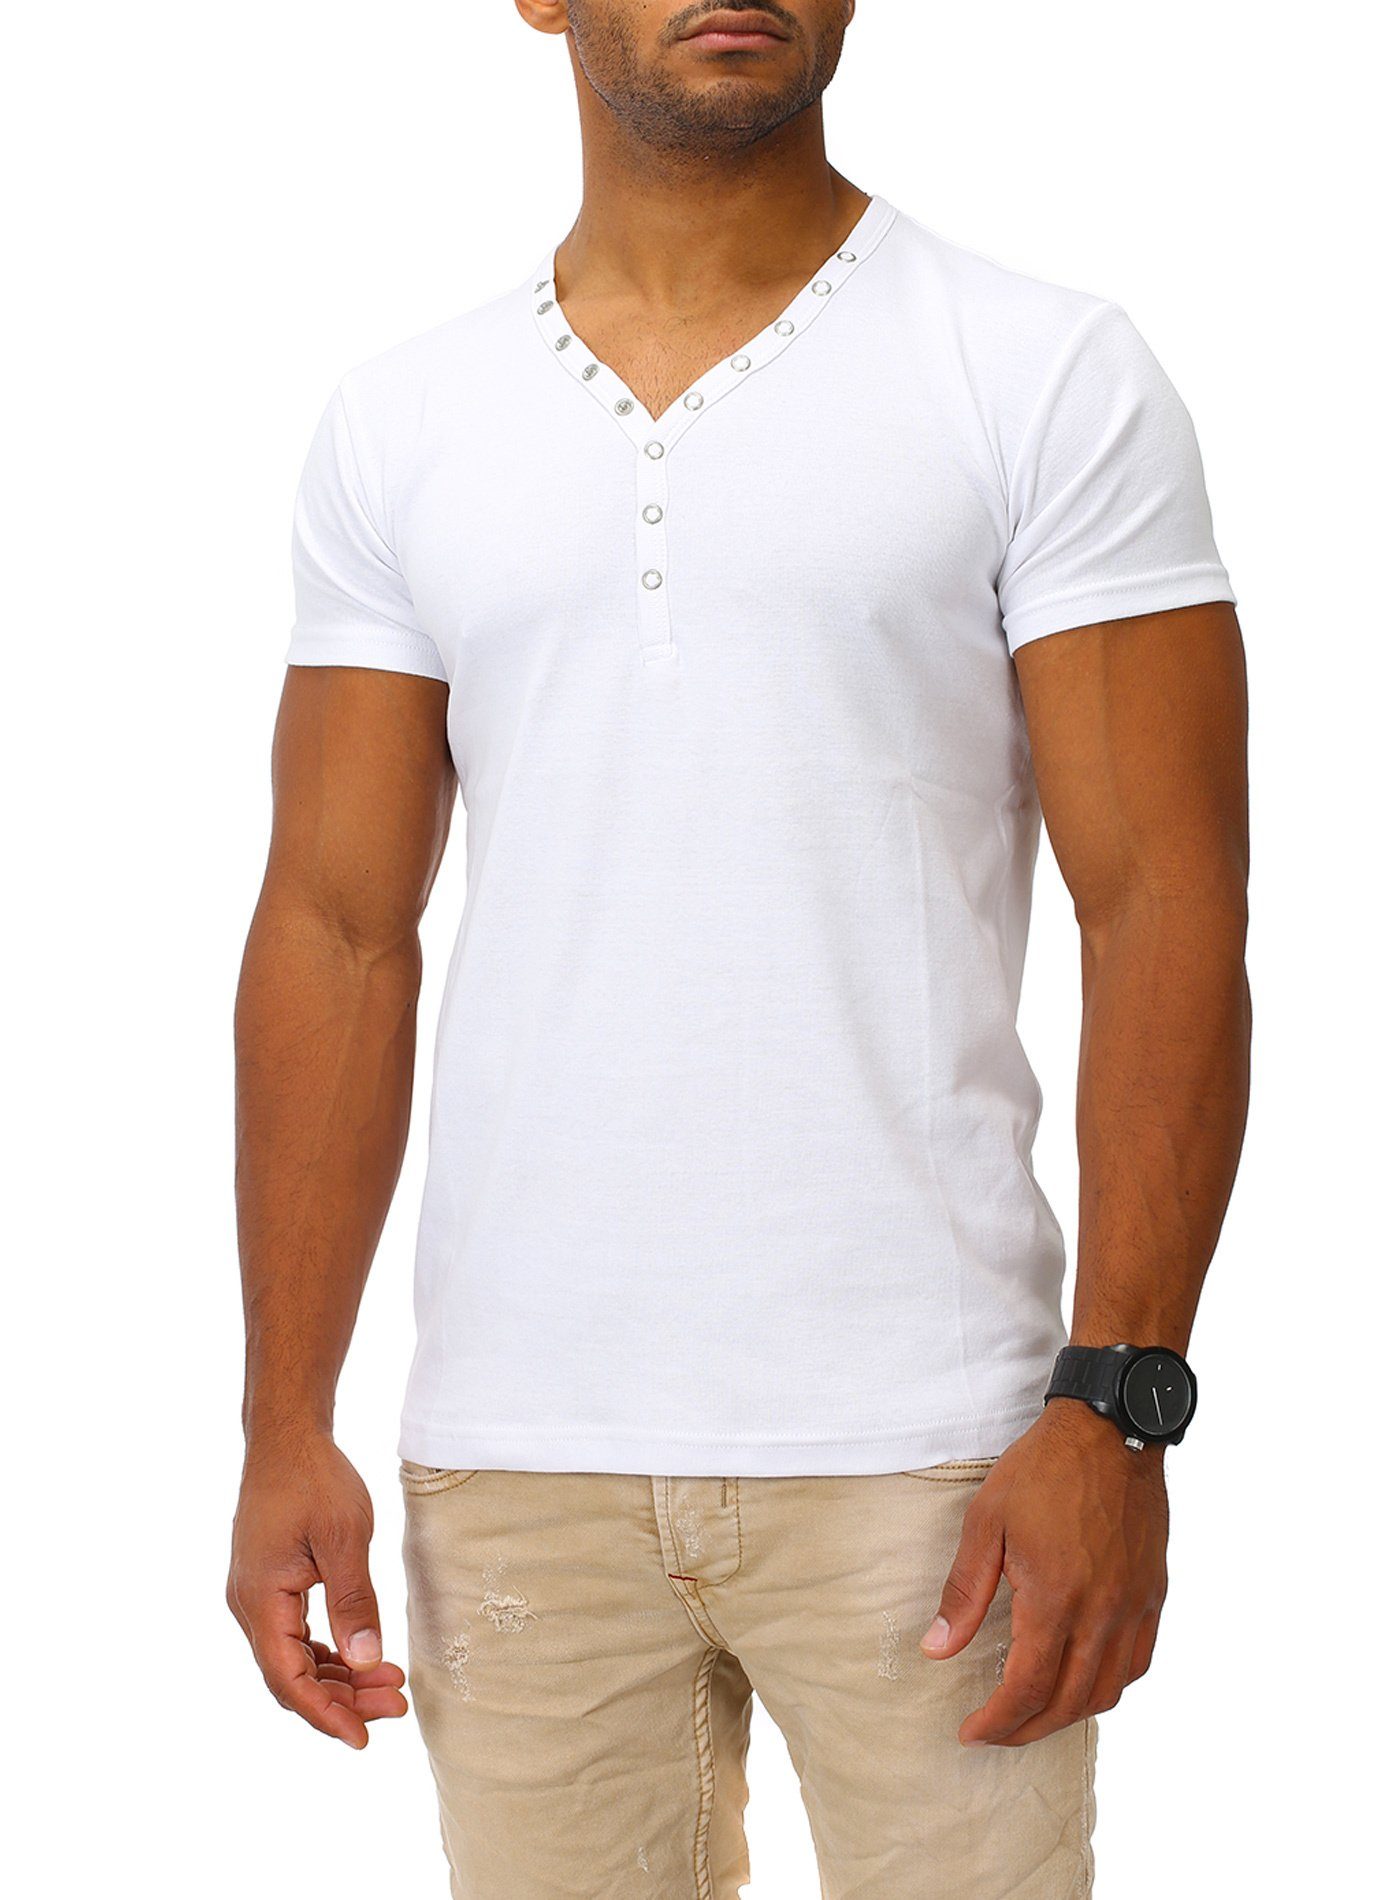 Joe Franks T-Shirt SMALL BUTTON in stylischem Slim Fit, Kurzarm Druckknopf white